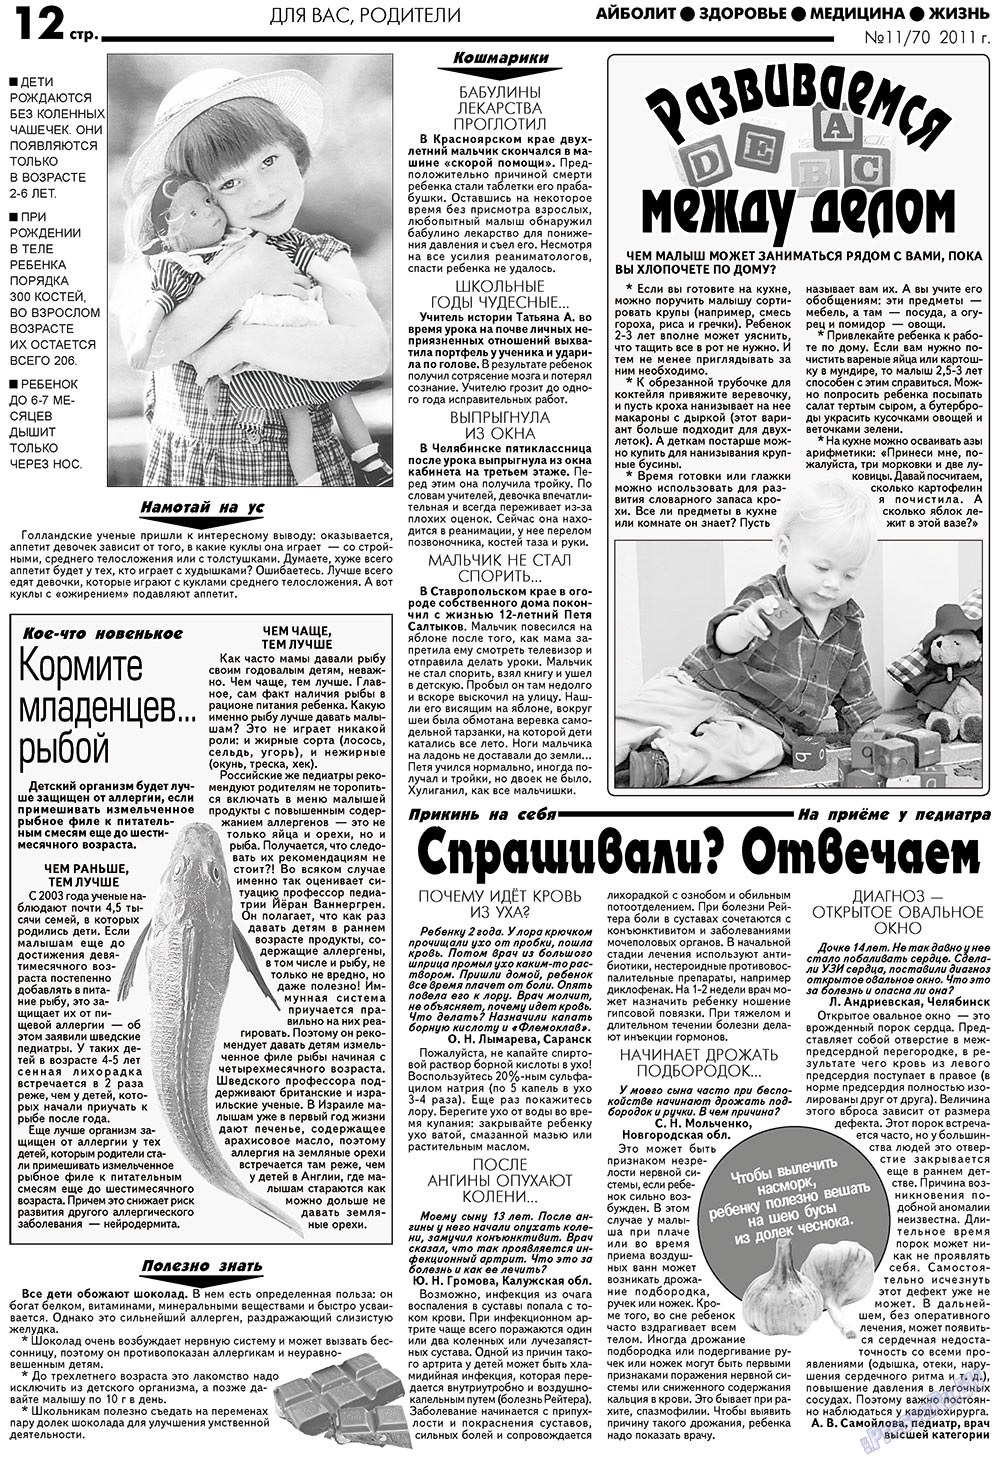 АйБолит (газета). 2011 год, номер 11, стр. 12